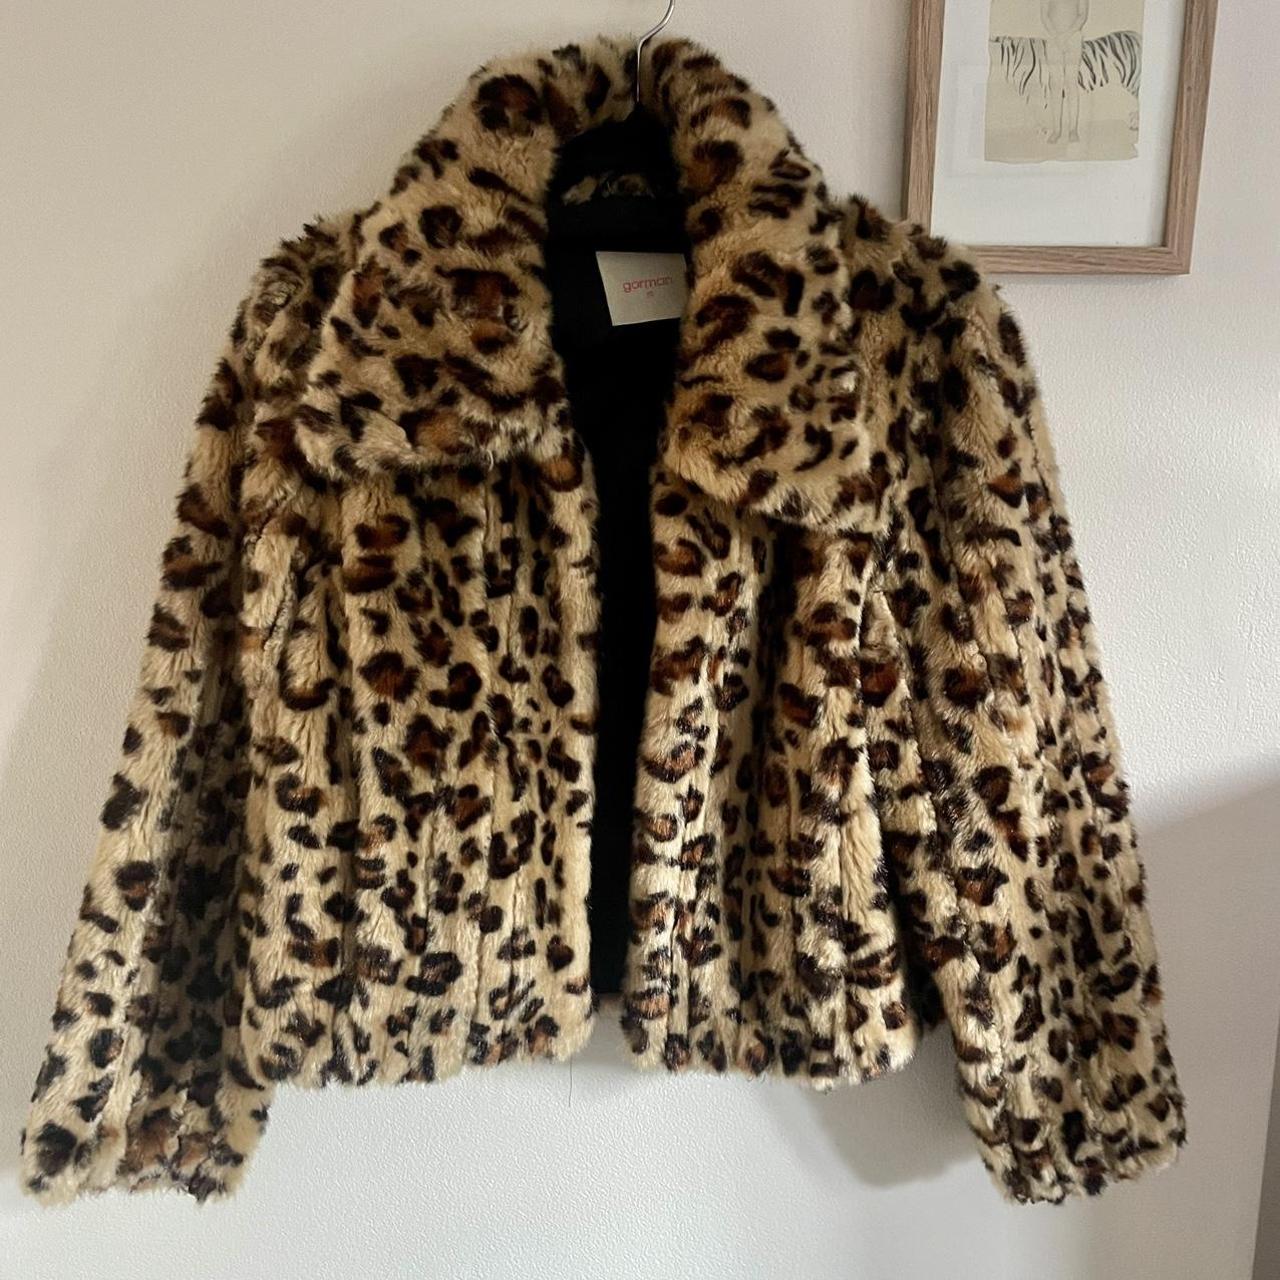 Gorman leopard print faux fur jacket. Stitched to... - Depop